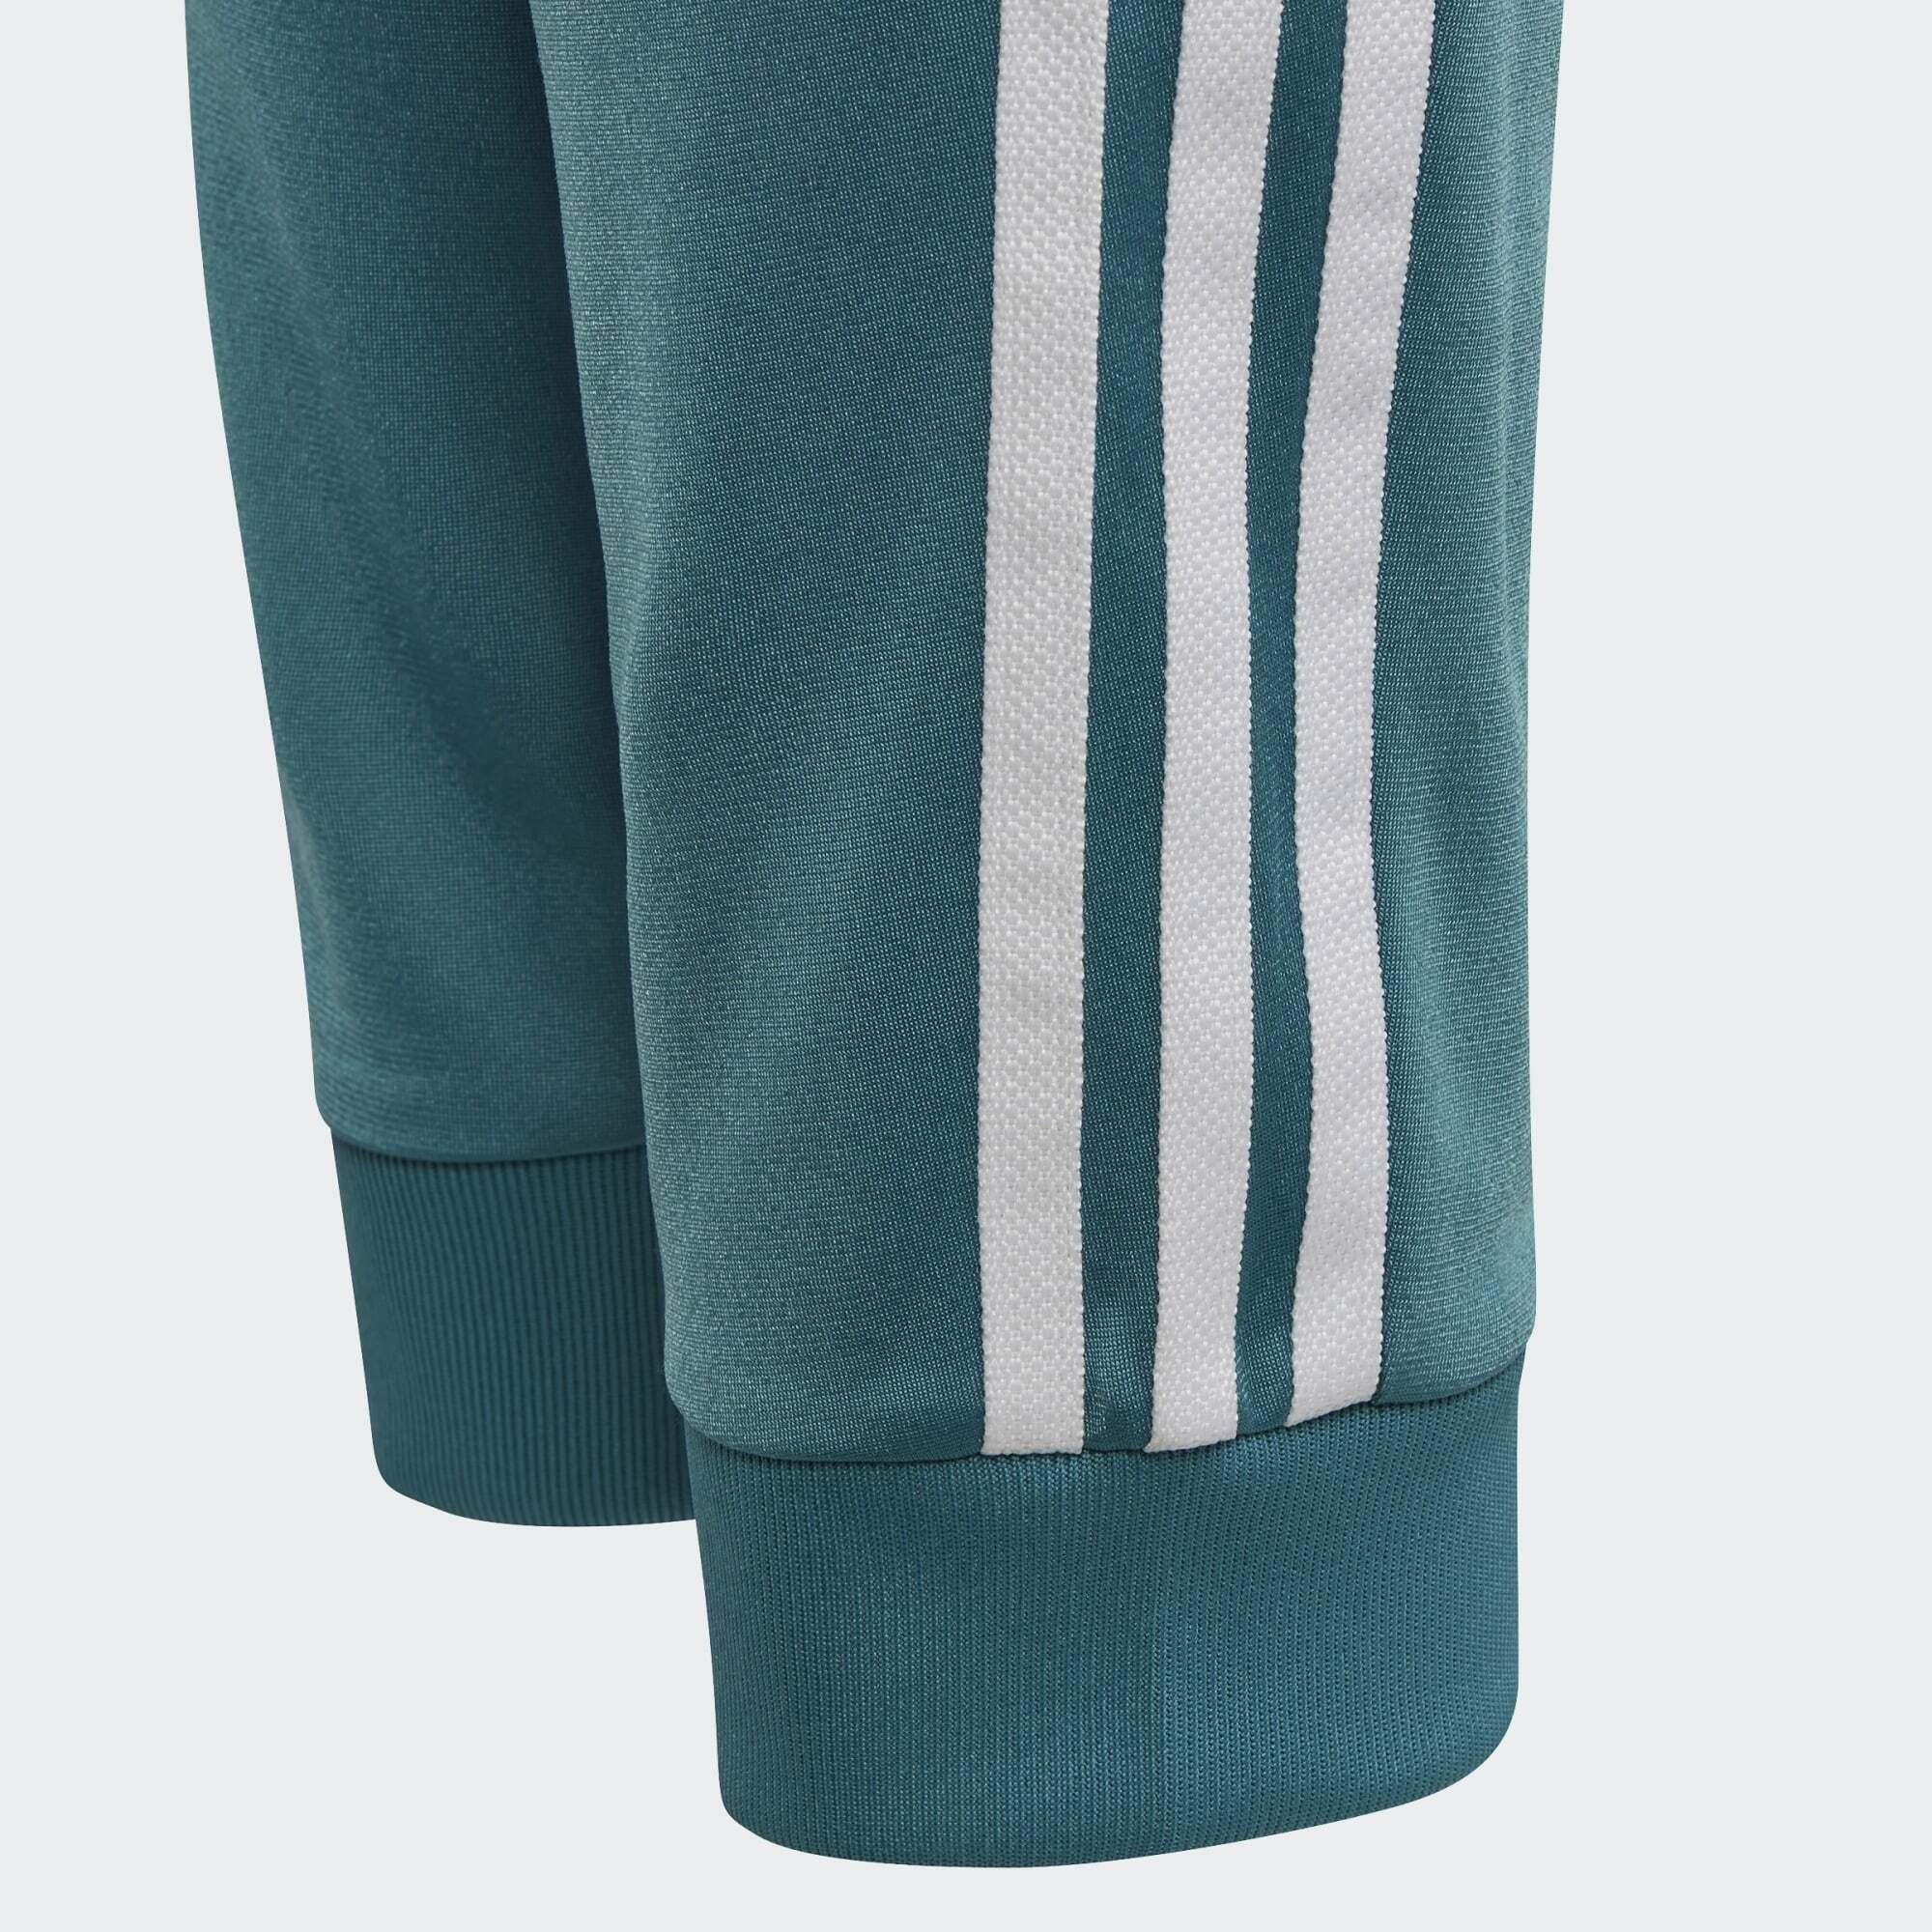 SST ADICOLOR TRAININGSHOSE Fusion Arctic Leichtathletik-Hose adidas Originals